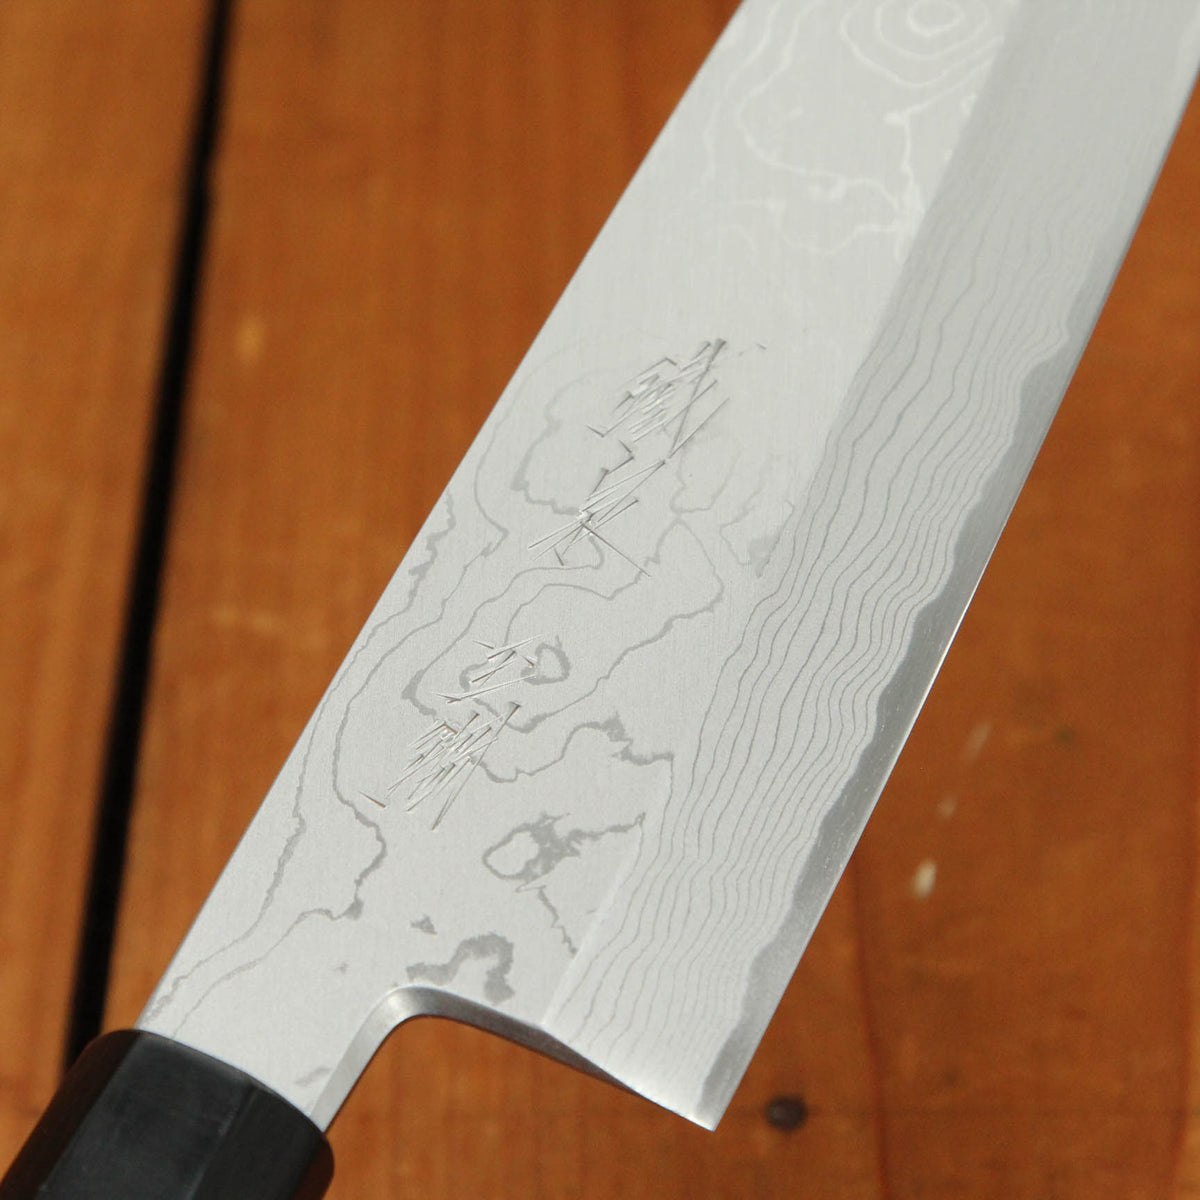 VTG Japan Made Emperor Steel Household Kitchen Knife Set Stainless & Wood  Handle